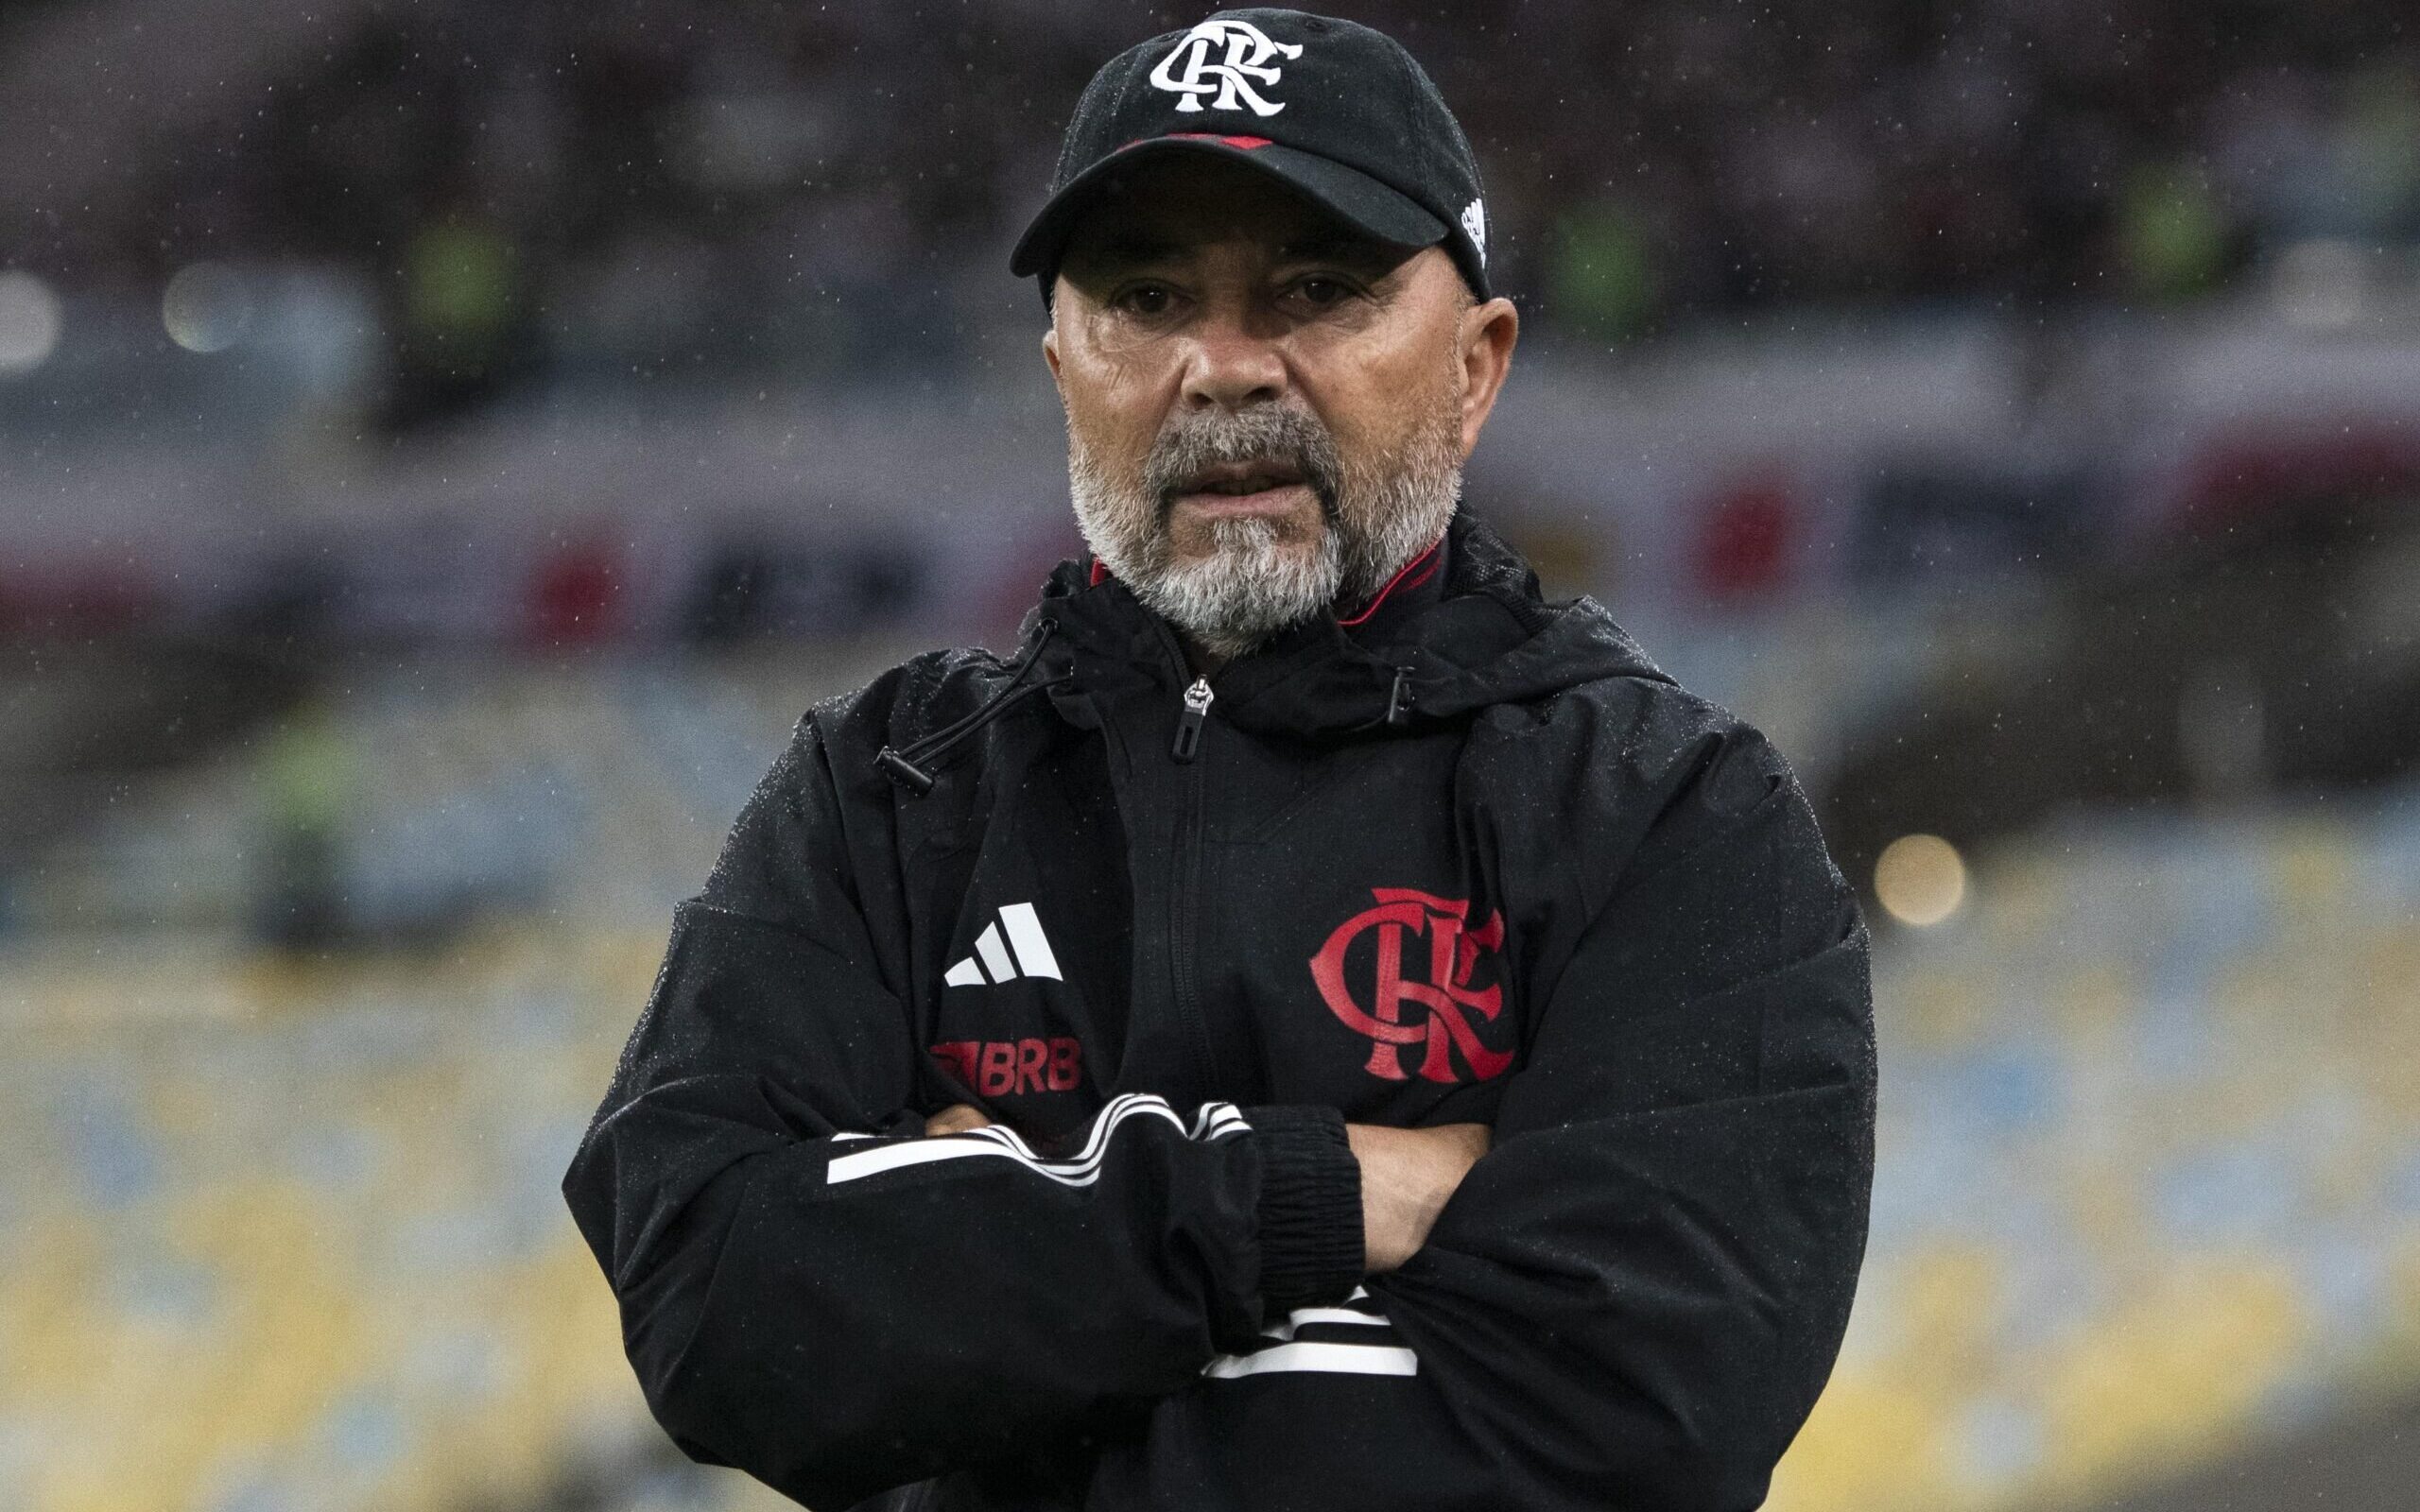 Sampaoli lamenta empate do Flamengo: Hoje esperava ganhar - VAVEL Brasil